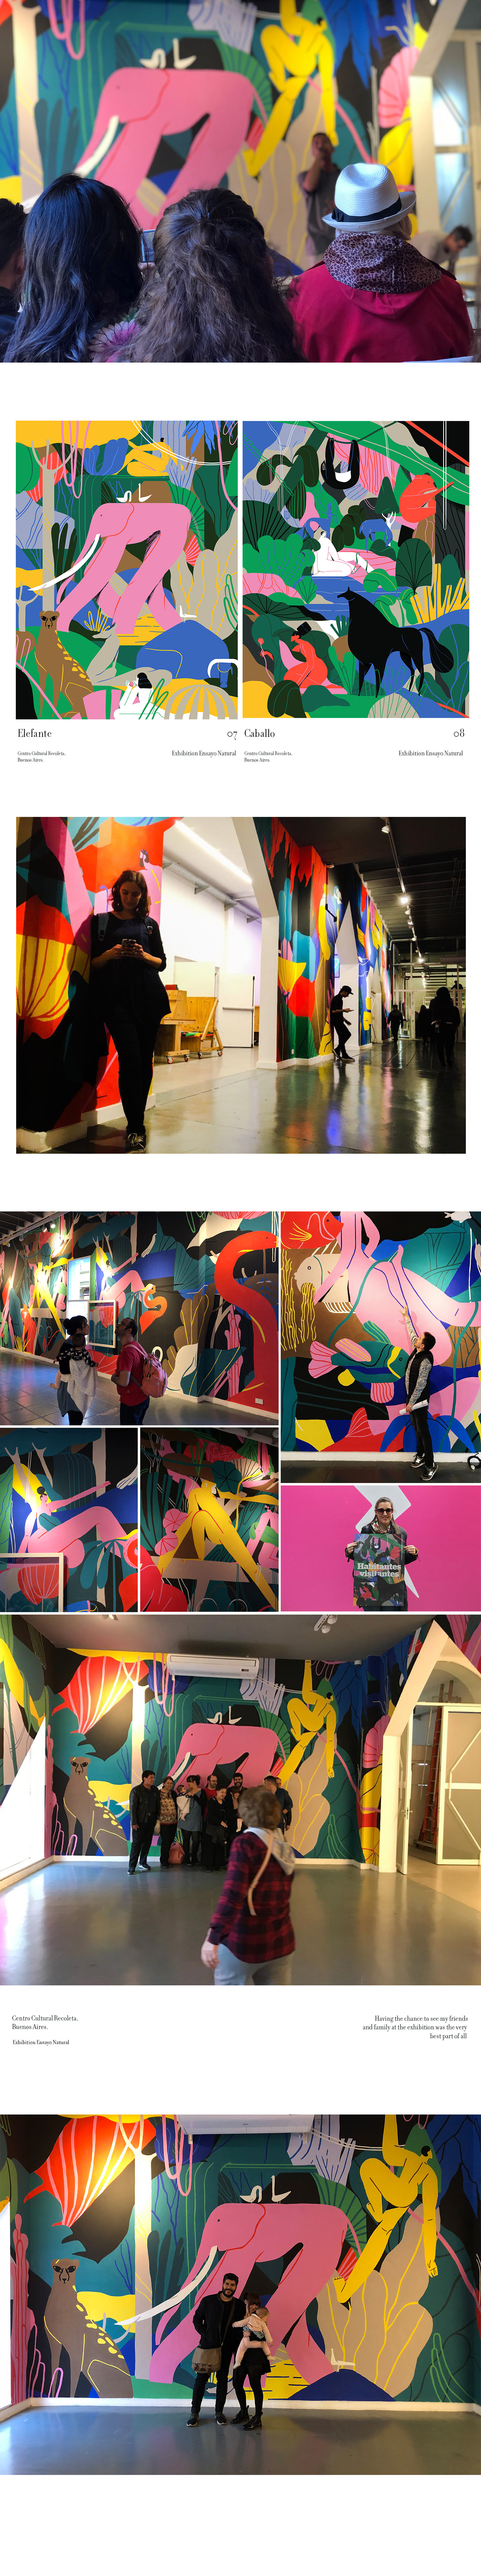 centro cultural recoleta Exhibition  Mural Nature animal animales color colores argentina buenos aires